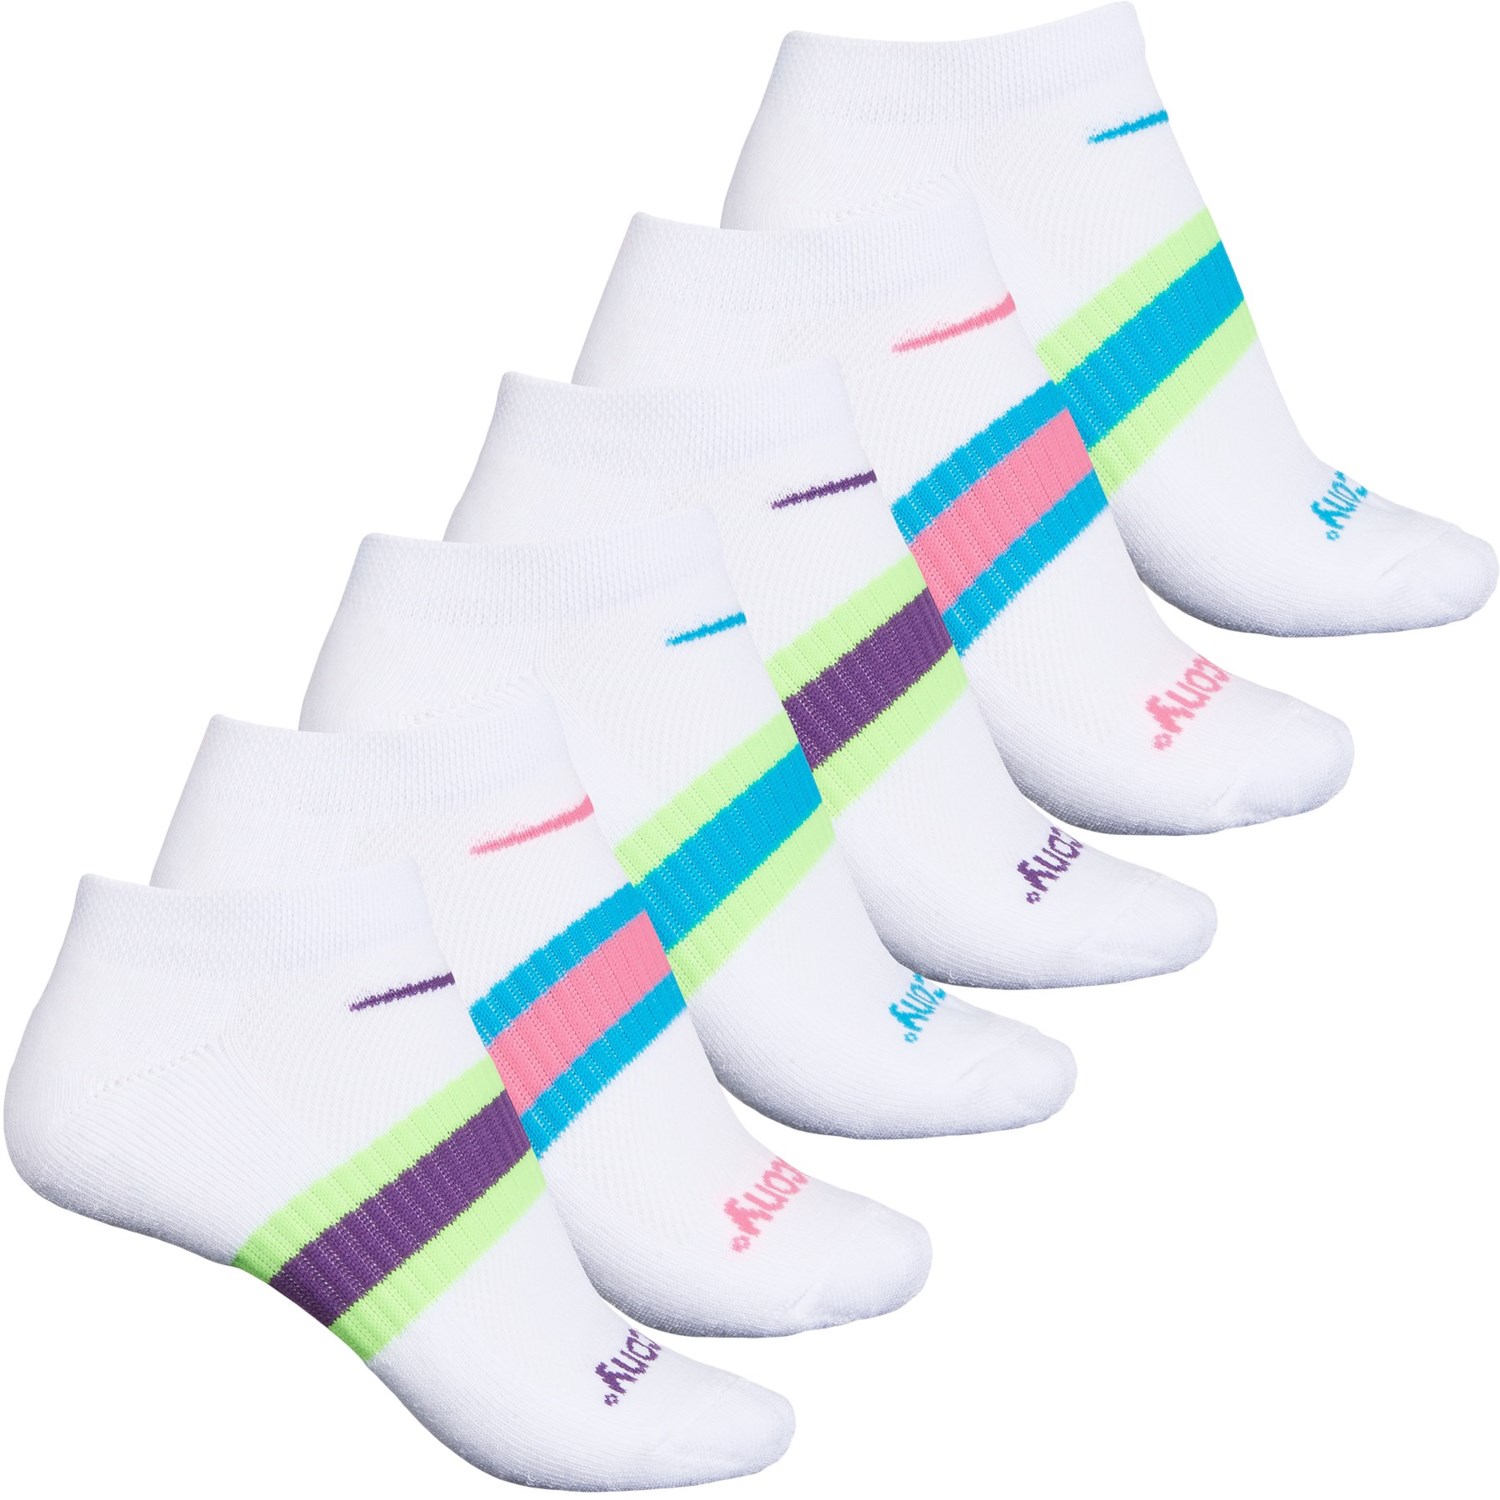 Saucony Arch Stripe Running Socks (For 